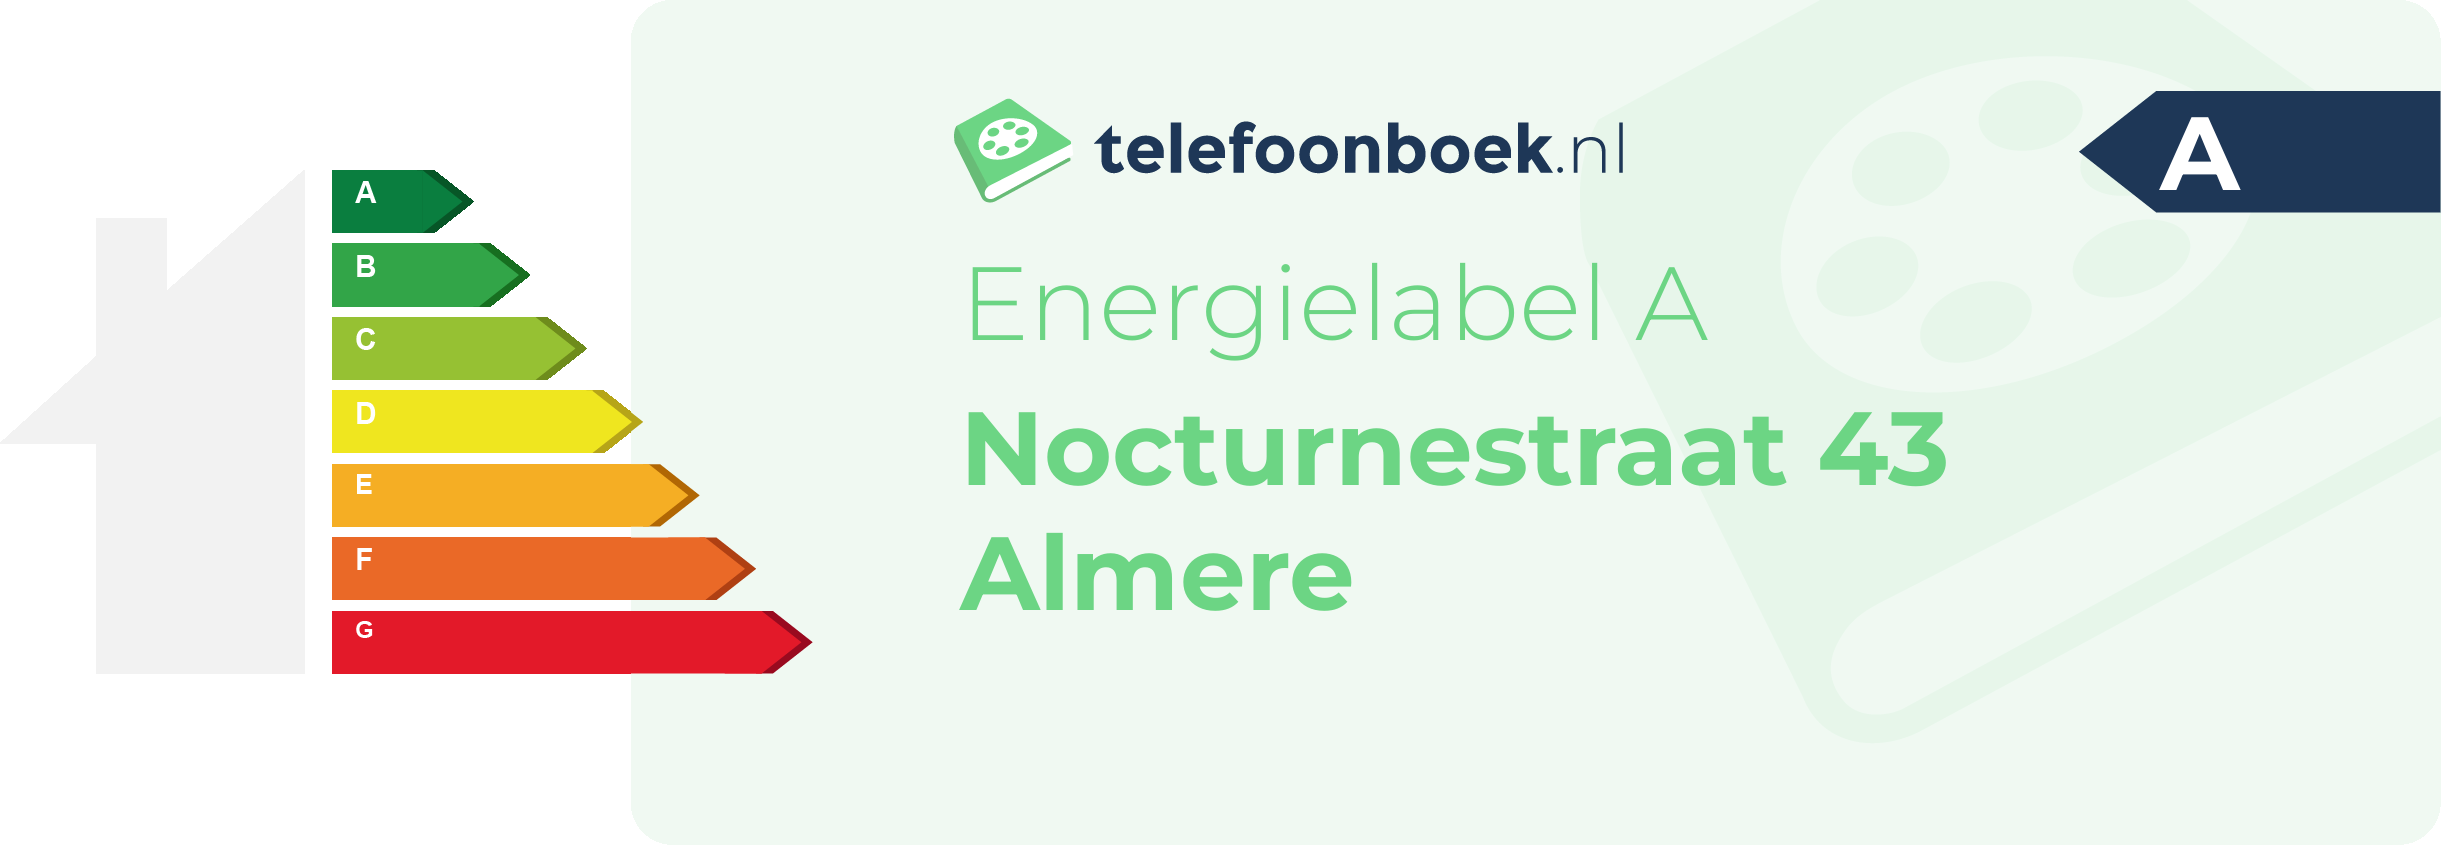 Energielabel Nocturnestraat 43 Almere